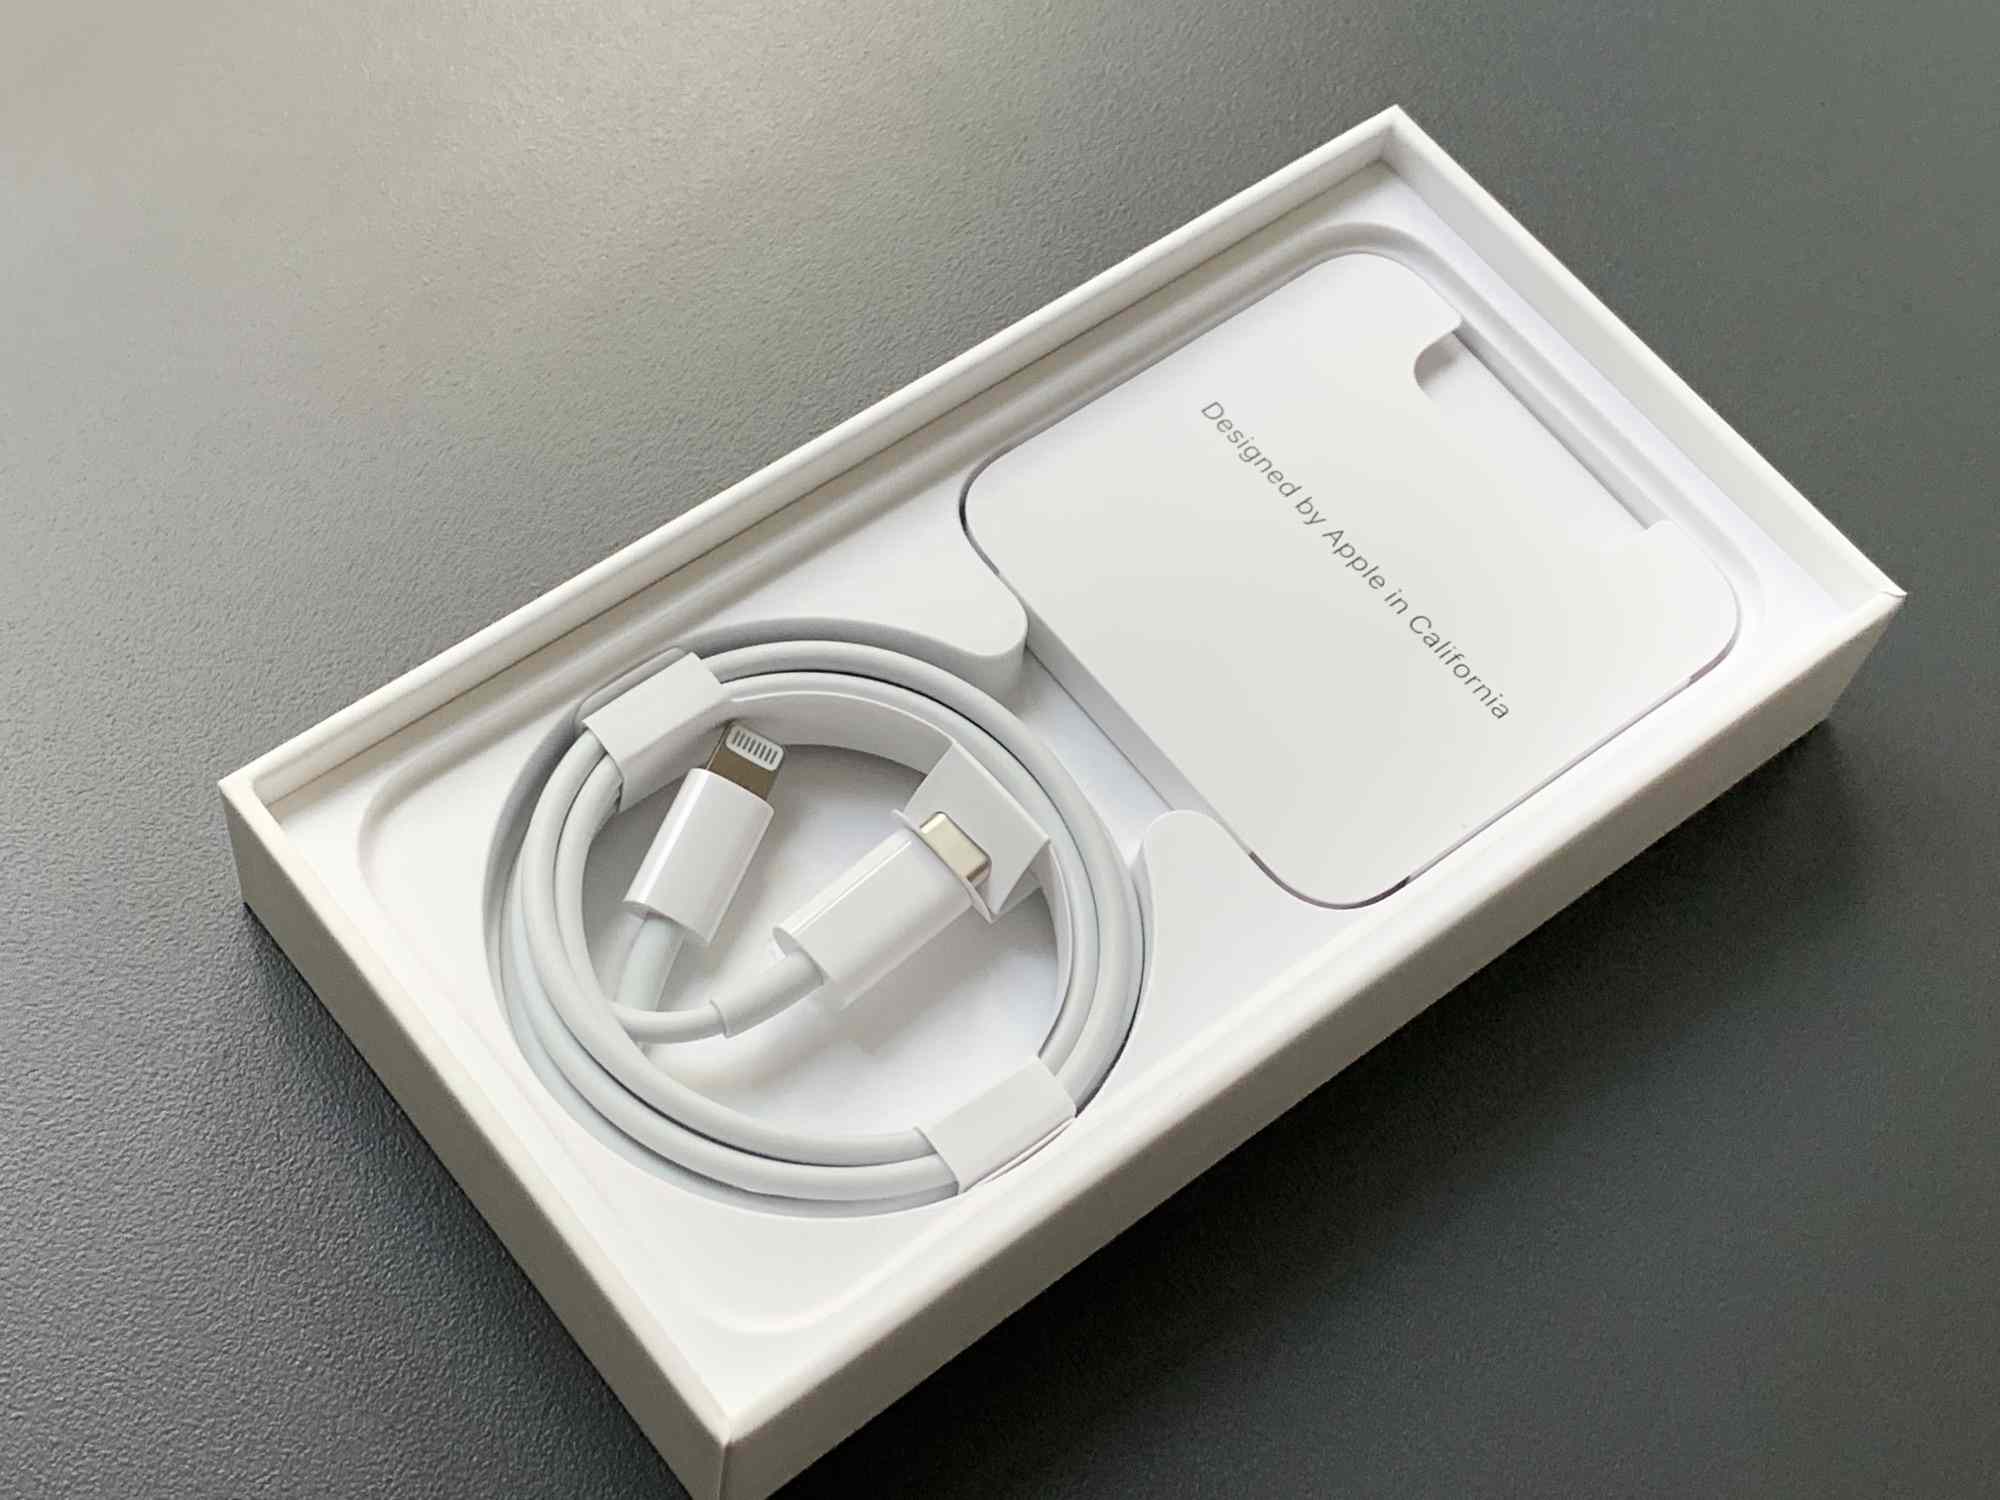 Bleskový kabel pro iPhone v krabici